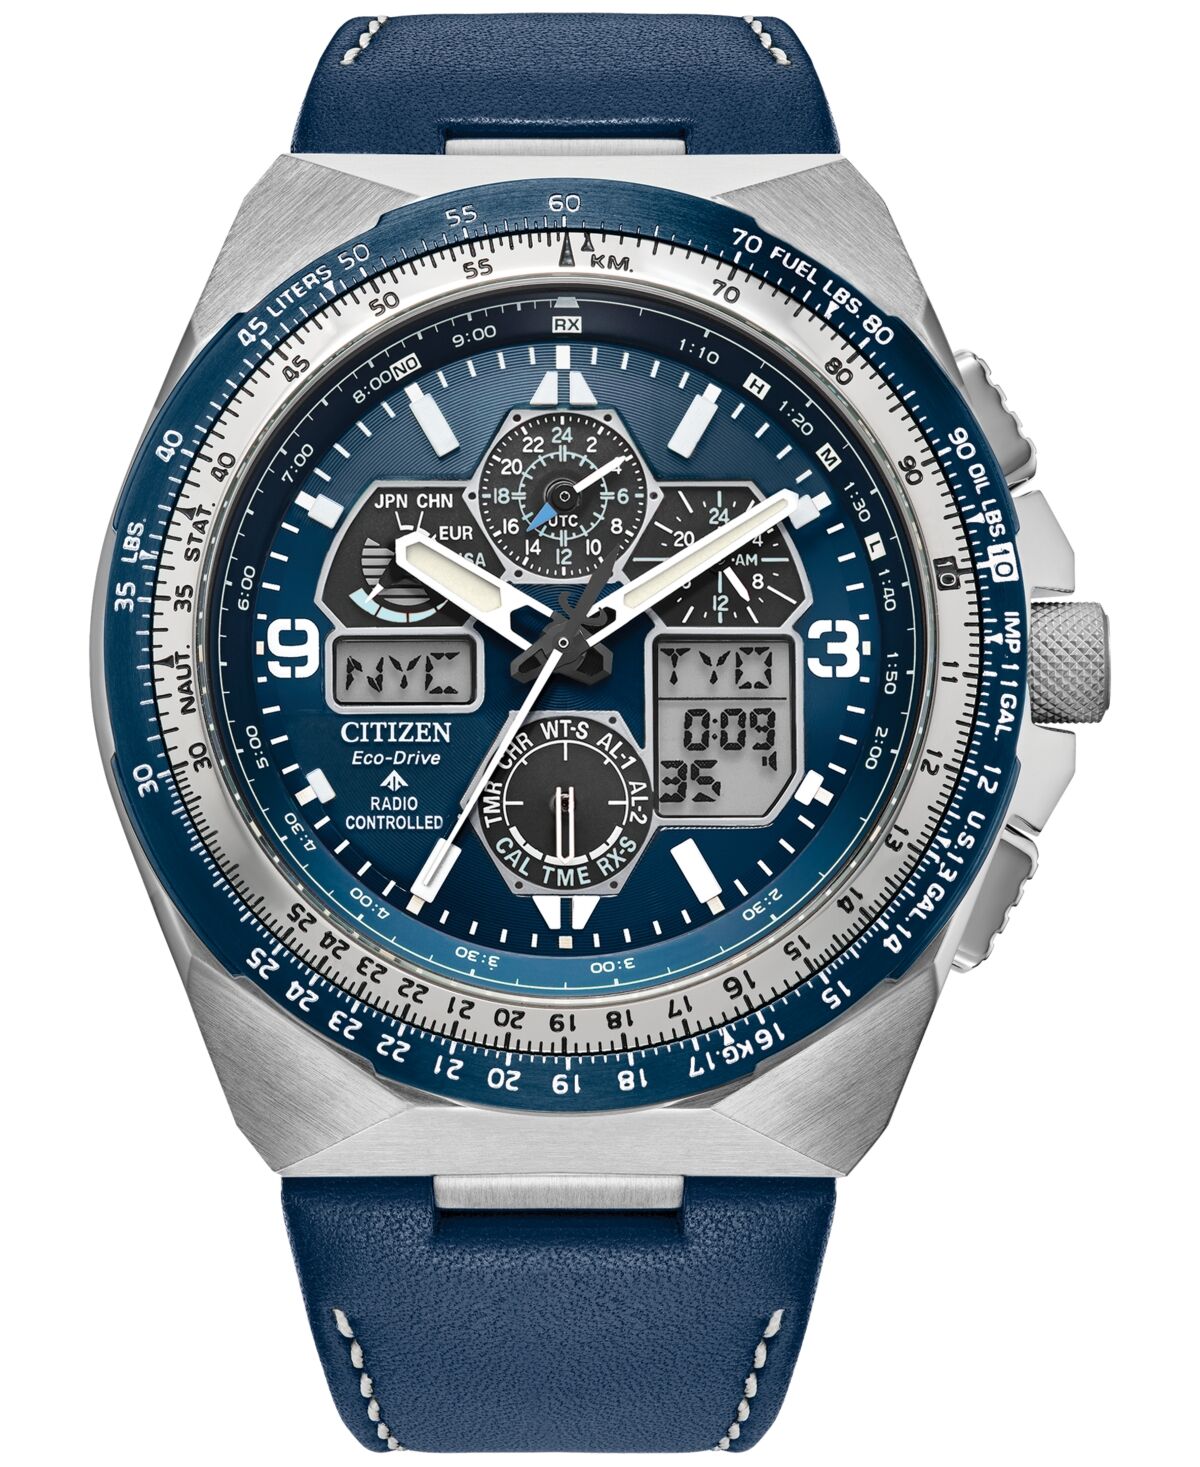 Citizen Eco-Drive Men's Chronograph Promaster Skyhawk Blue Leather Strap Watch 46mm - Blue